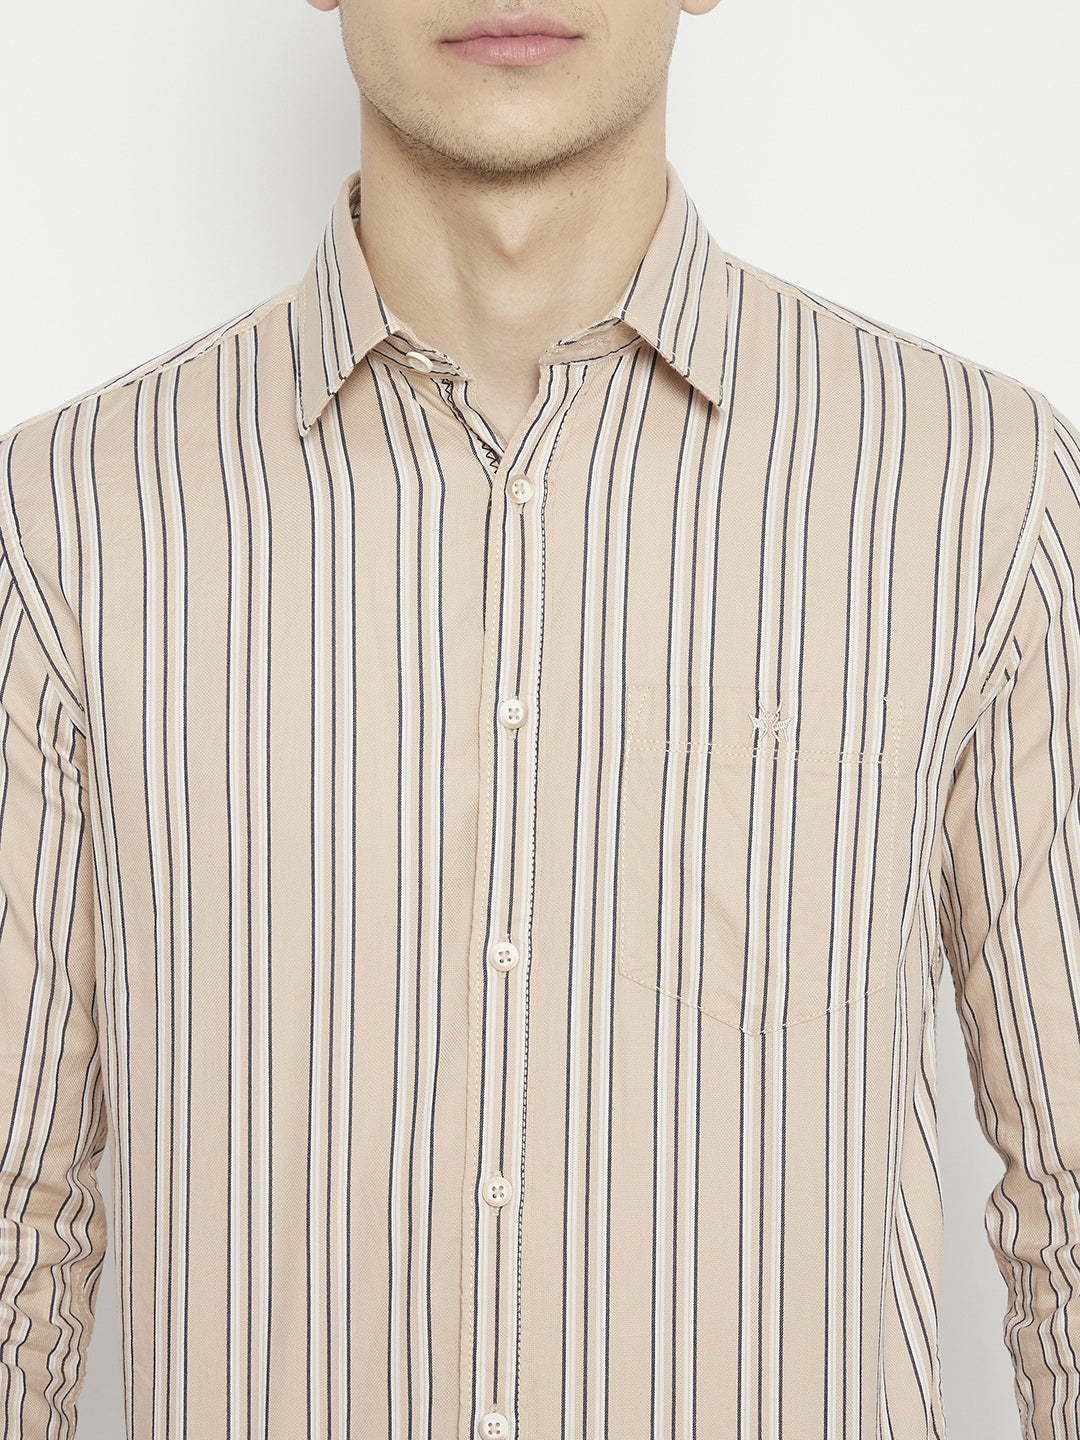 Beige Striped Slim Fit shirt - Men Shirts